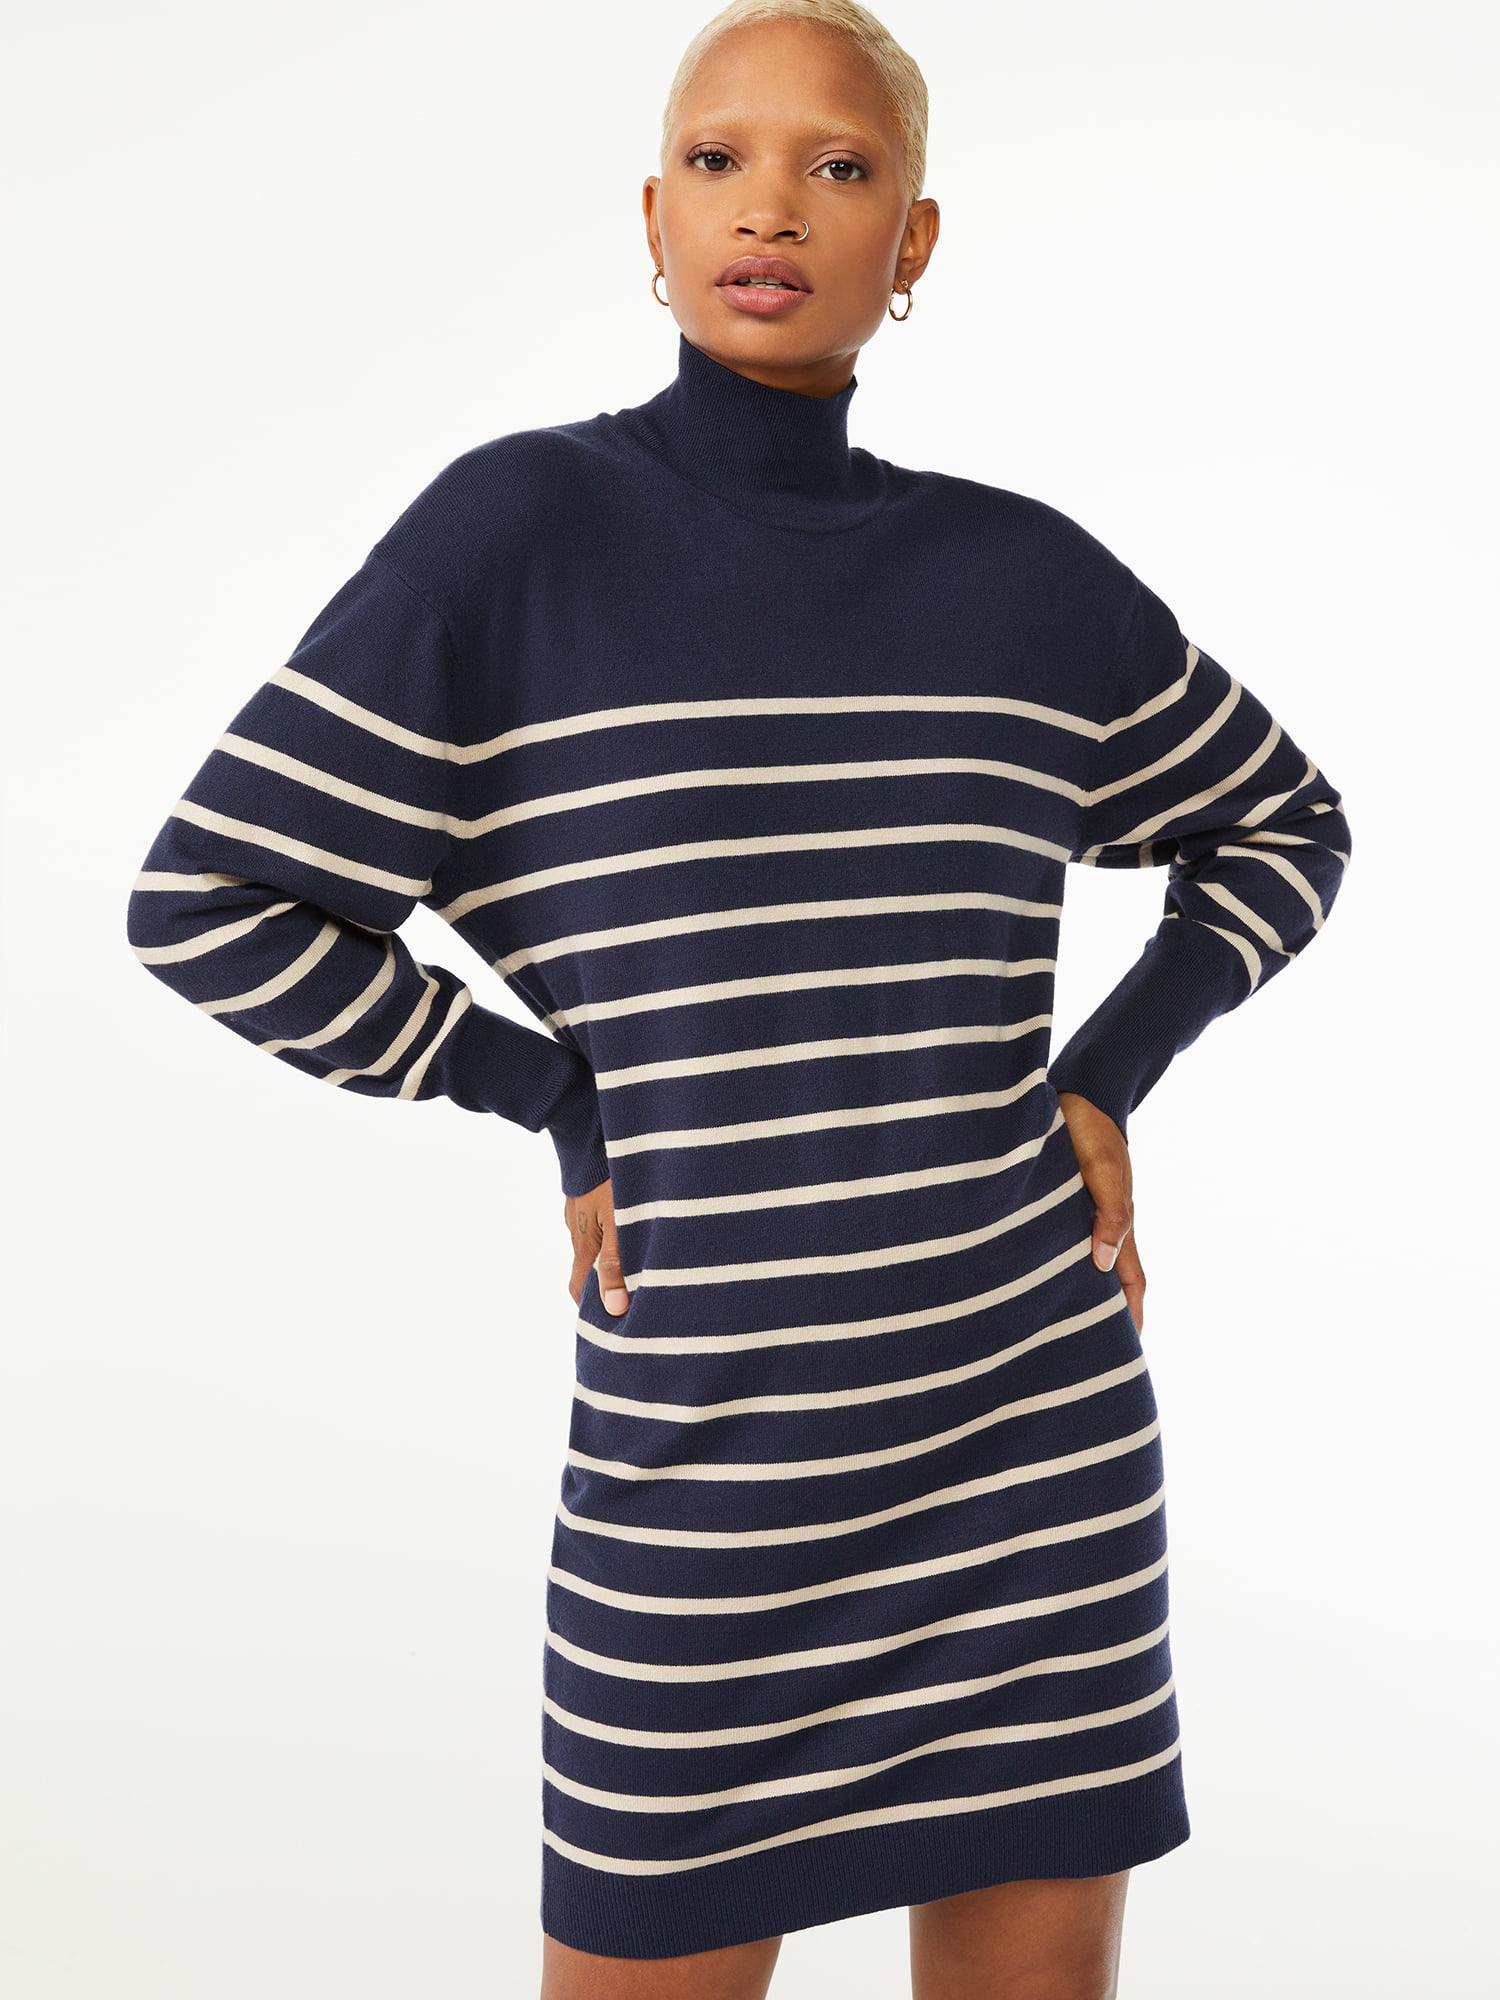 Free Assembly Women's Turtleneck Sweater Dress - Walmart.com